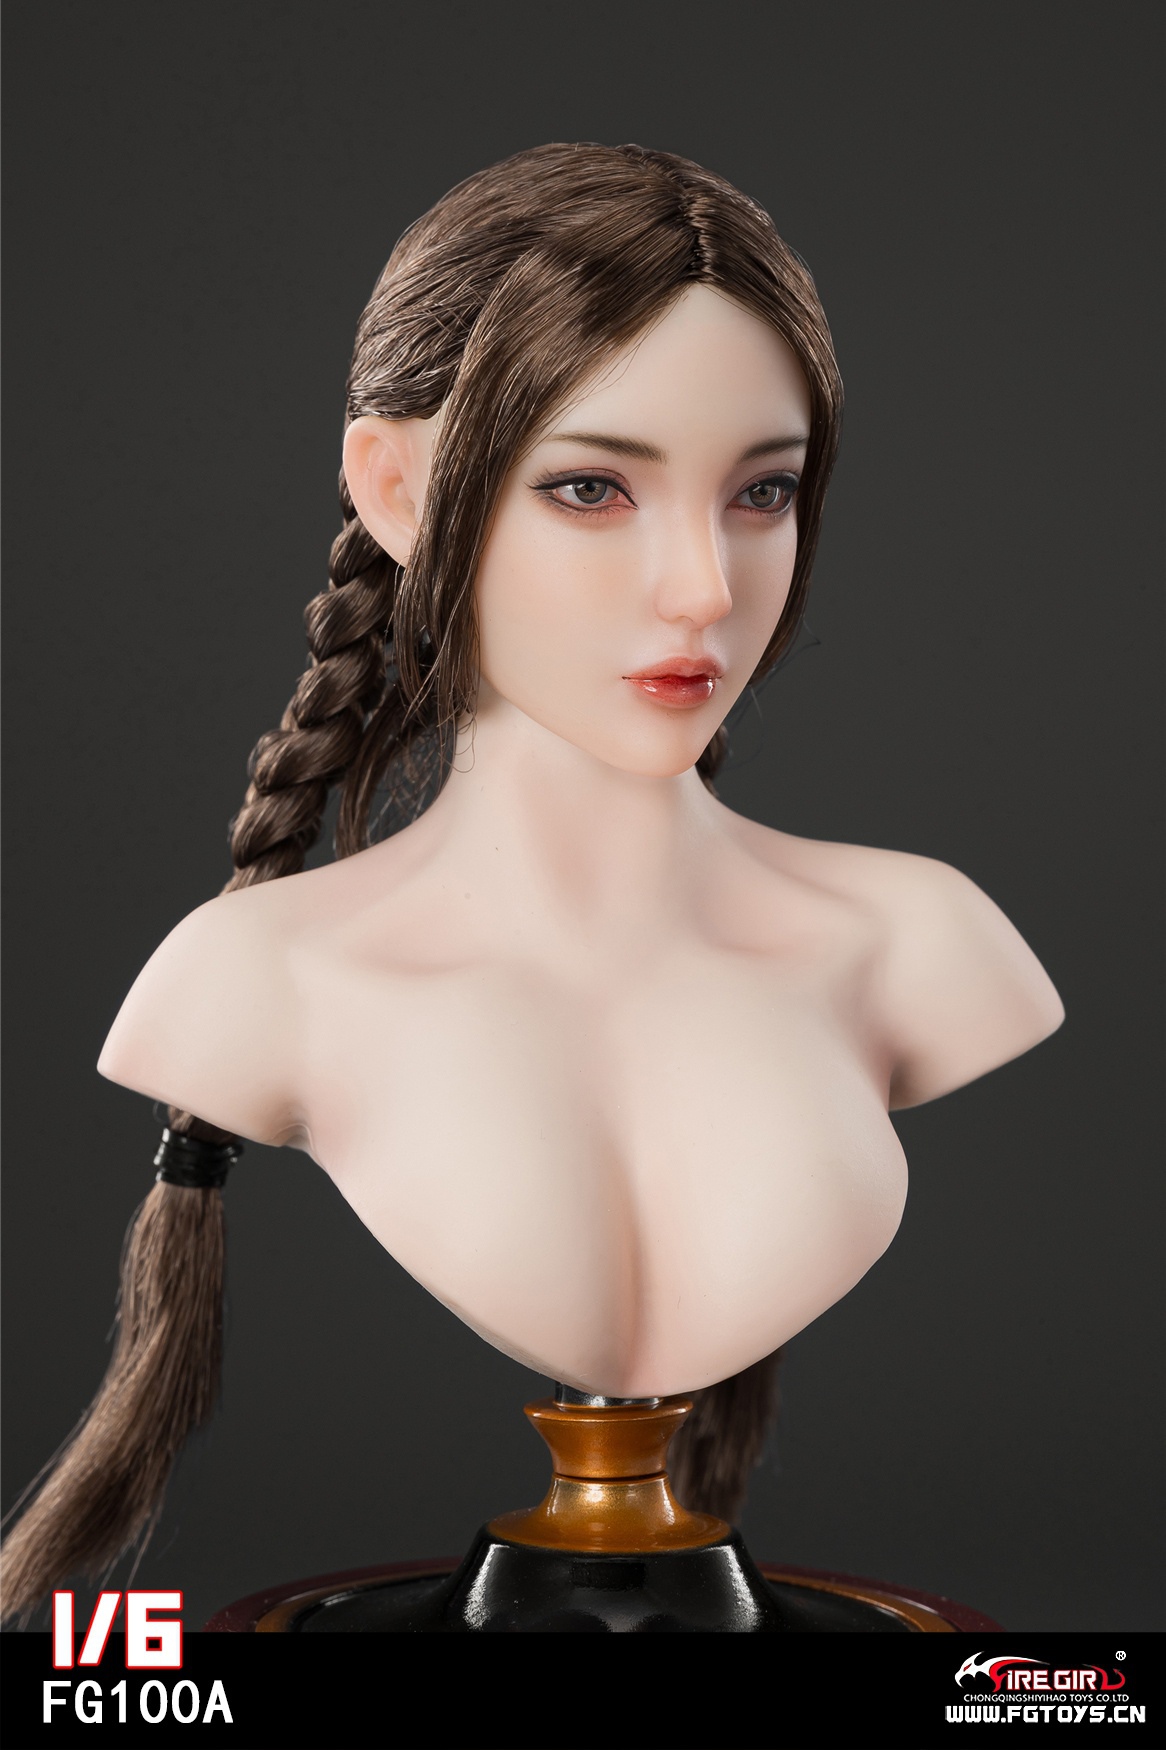 headsculpt - NEW PRODUCT: Fire Girl Toys: Western Girl-Aisha [movable eyes, ABC three hairstyles] (#FG100)  3421